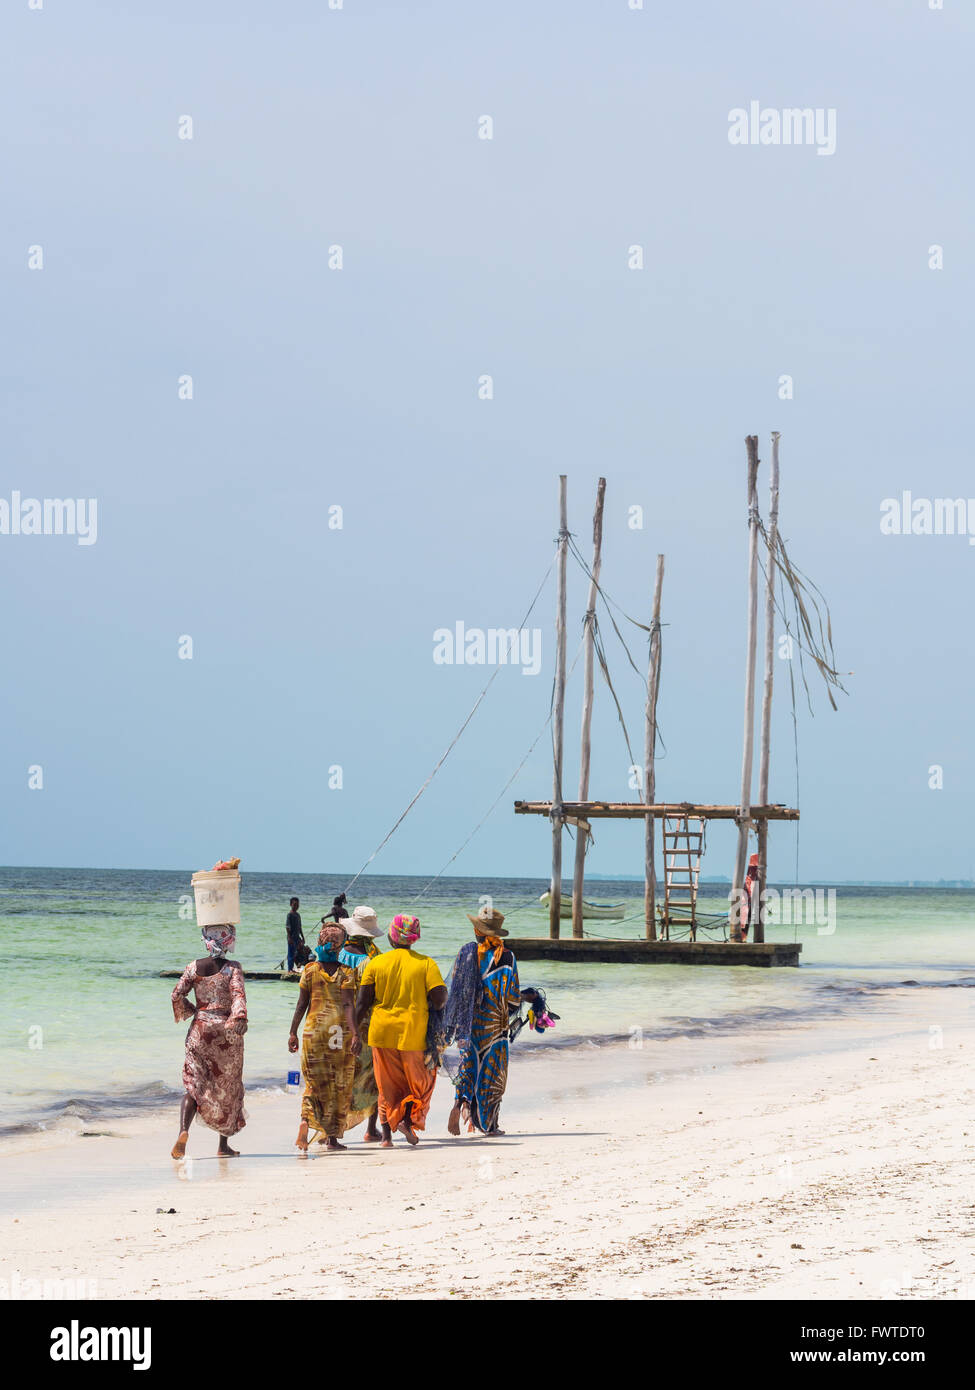 Local women going fishing on a beach in Zanzibar, Tanzania. Stock Photo